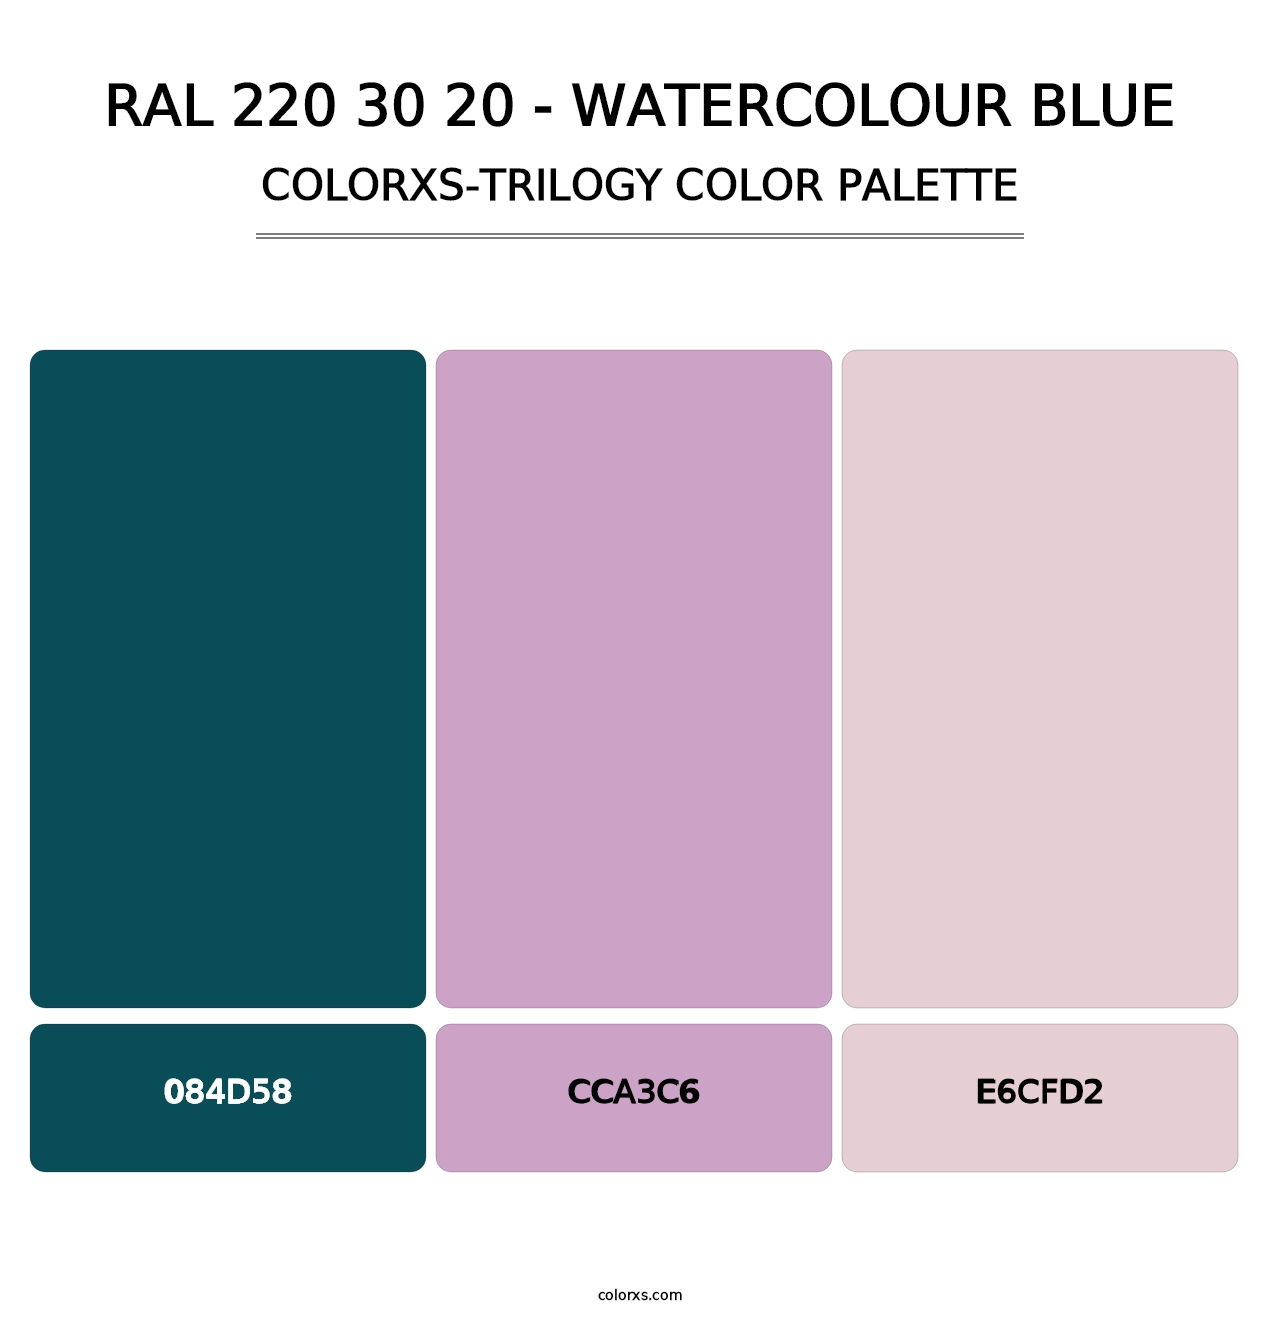 RAL 220 30 20 - Watercolour Blue - Colorxs Trilogy Palette